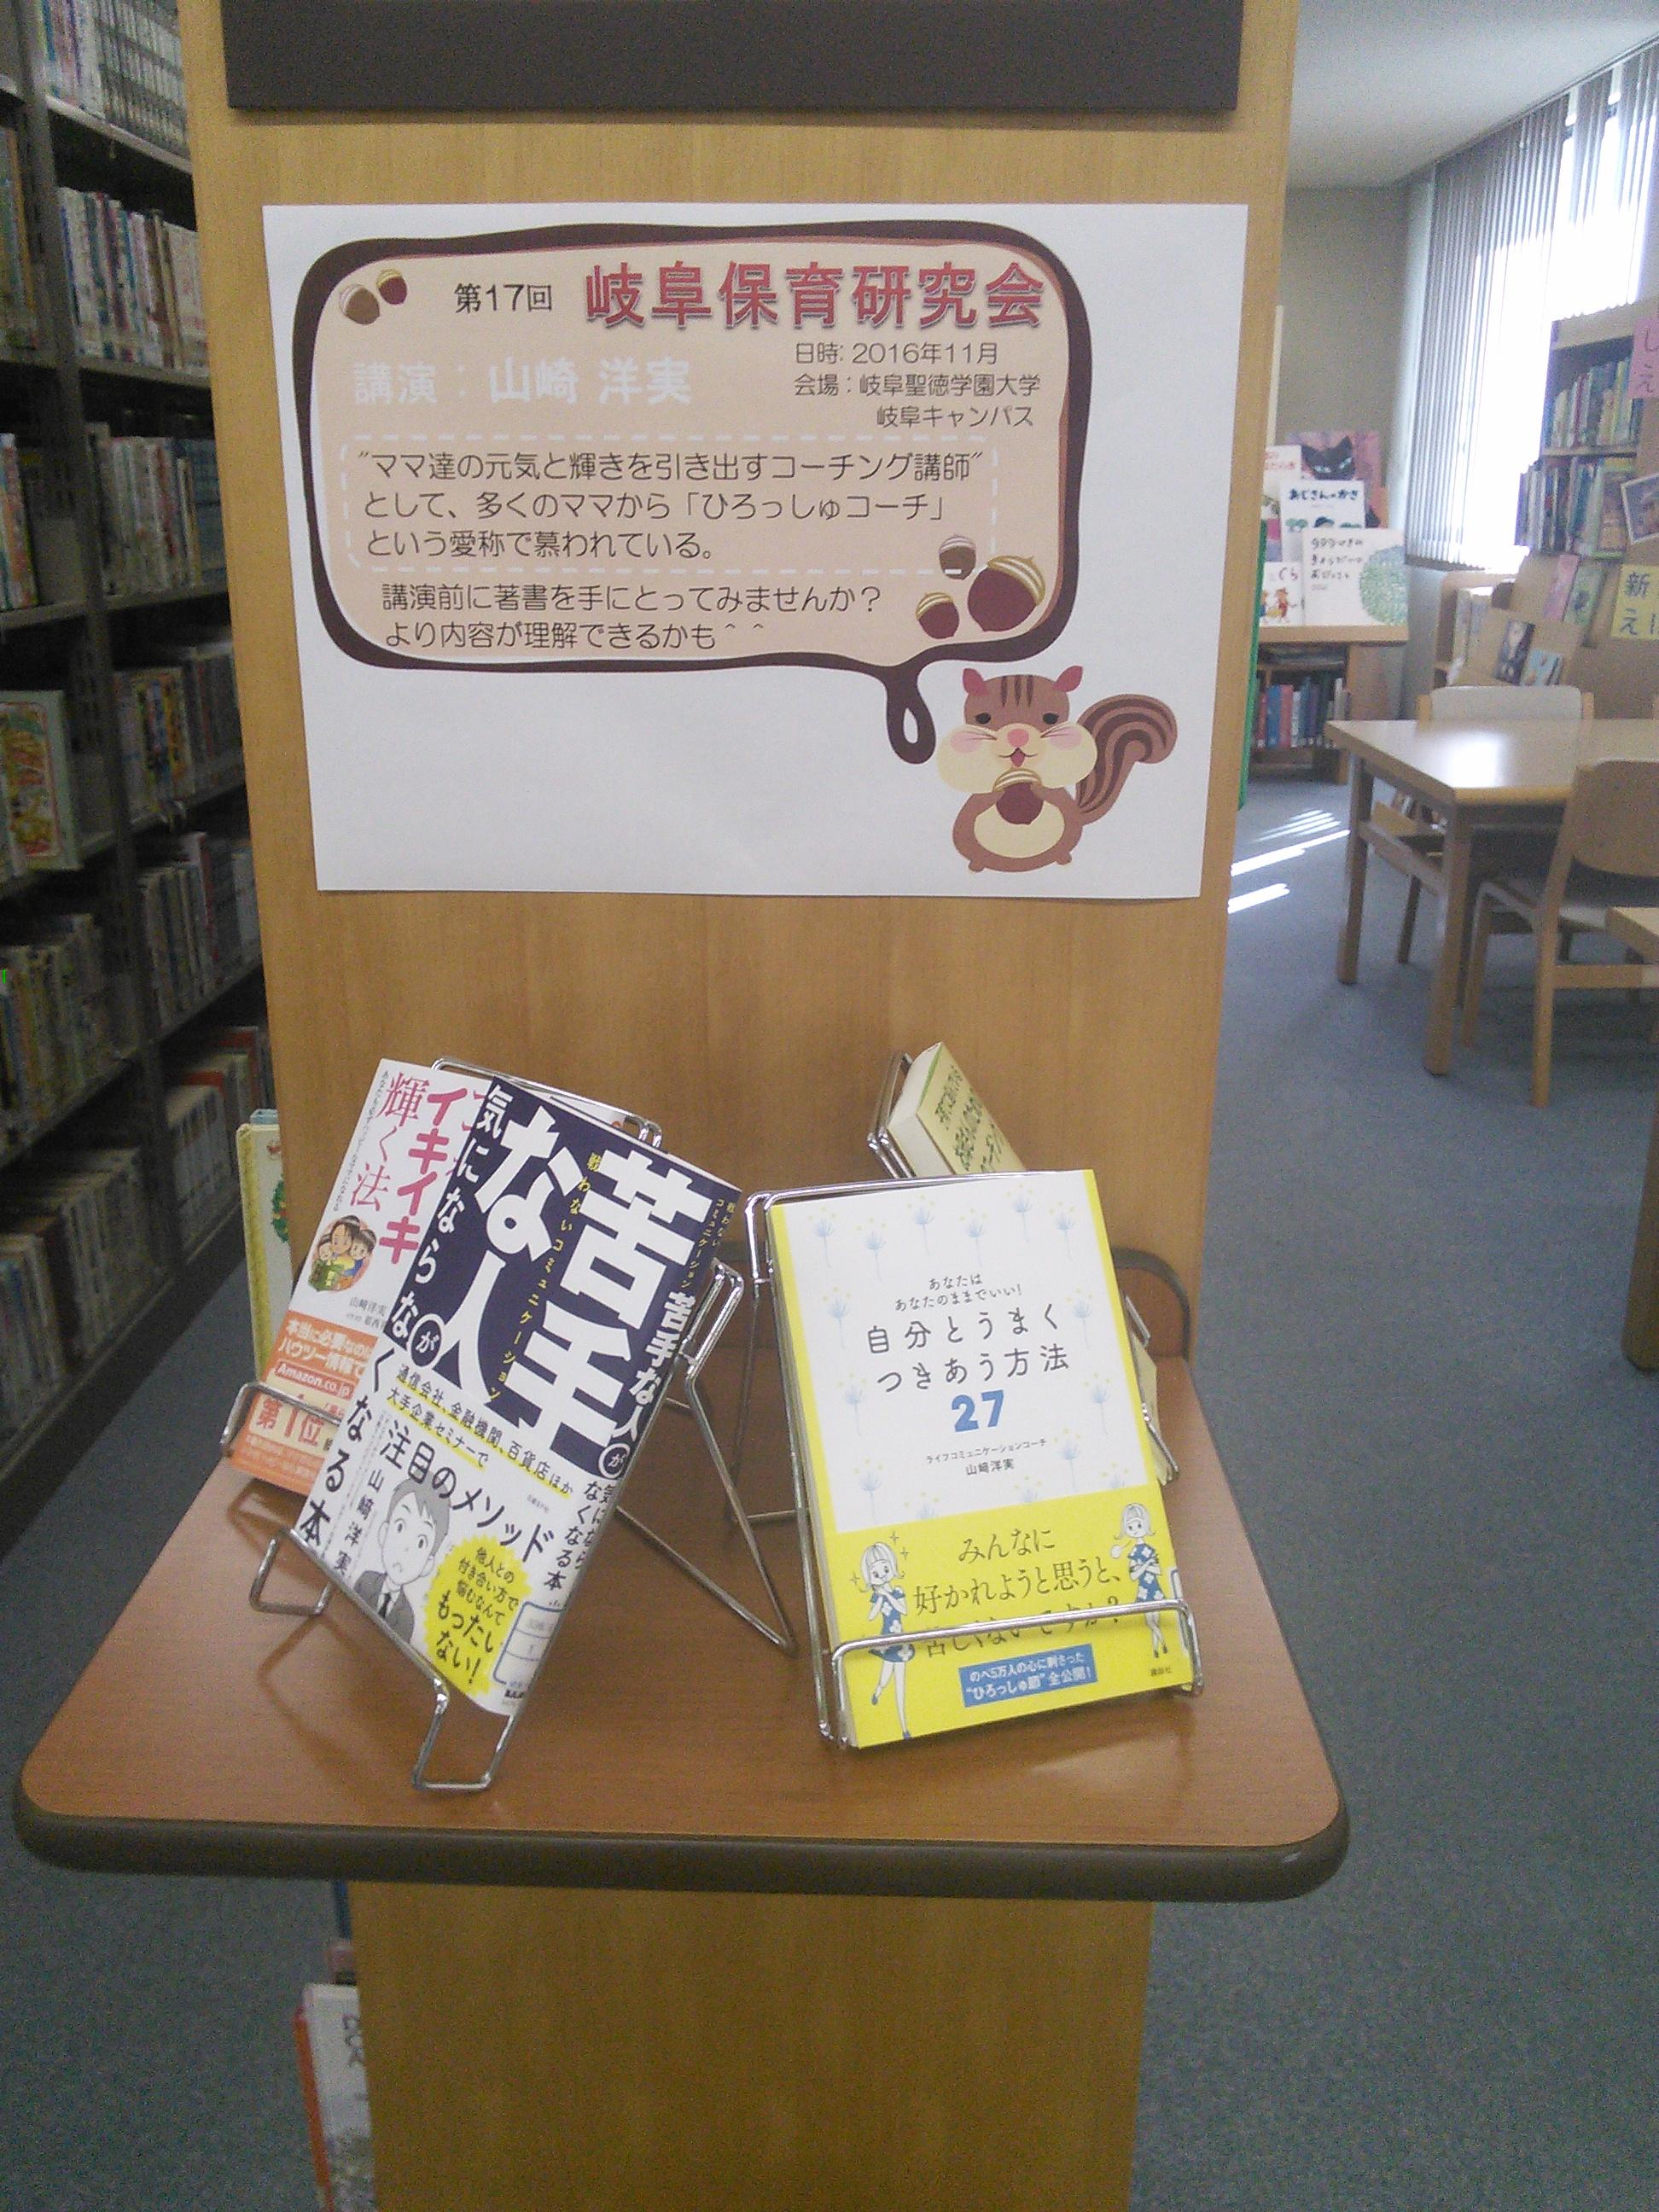 http://www.shotoku.ac.jp/facilities/library/gifu/03b3551580da18fbfd105ae63823c419cb9dce46.jpg